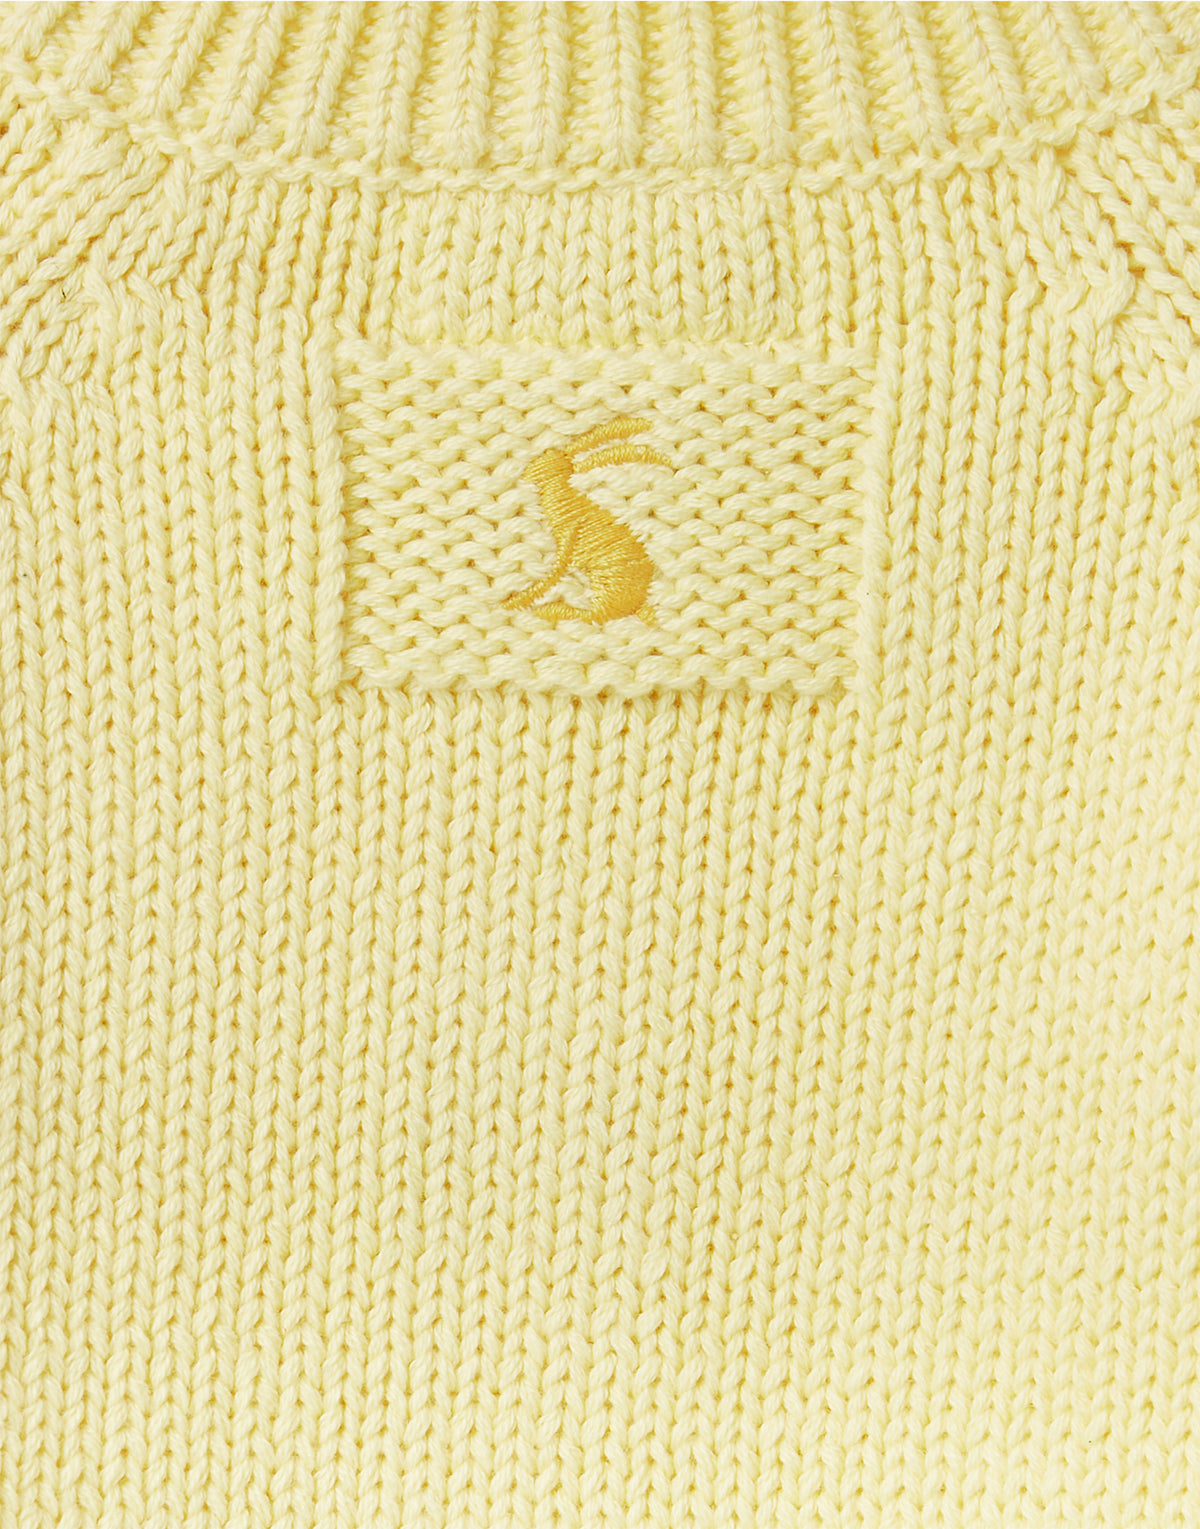 Mädchen Strickjacke The Knit Cardigan Yellow Ducks